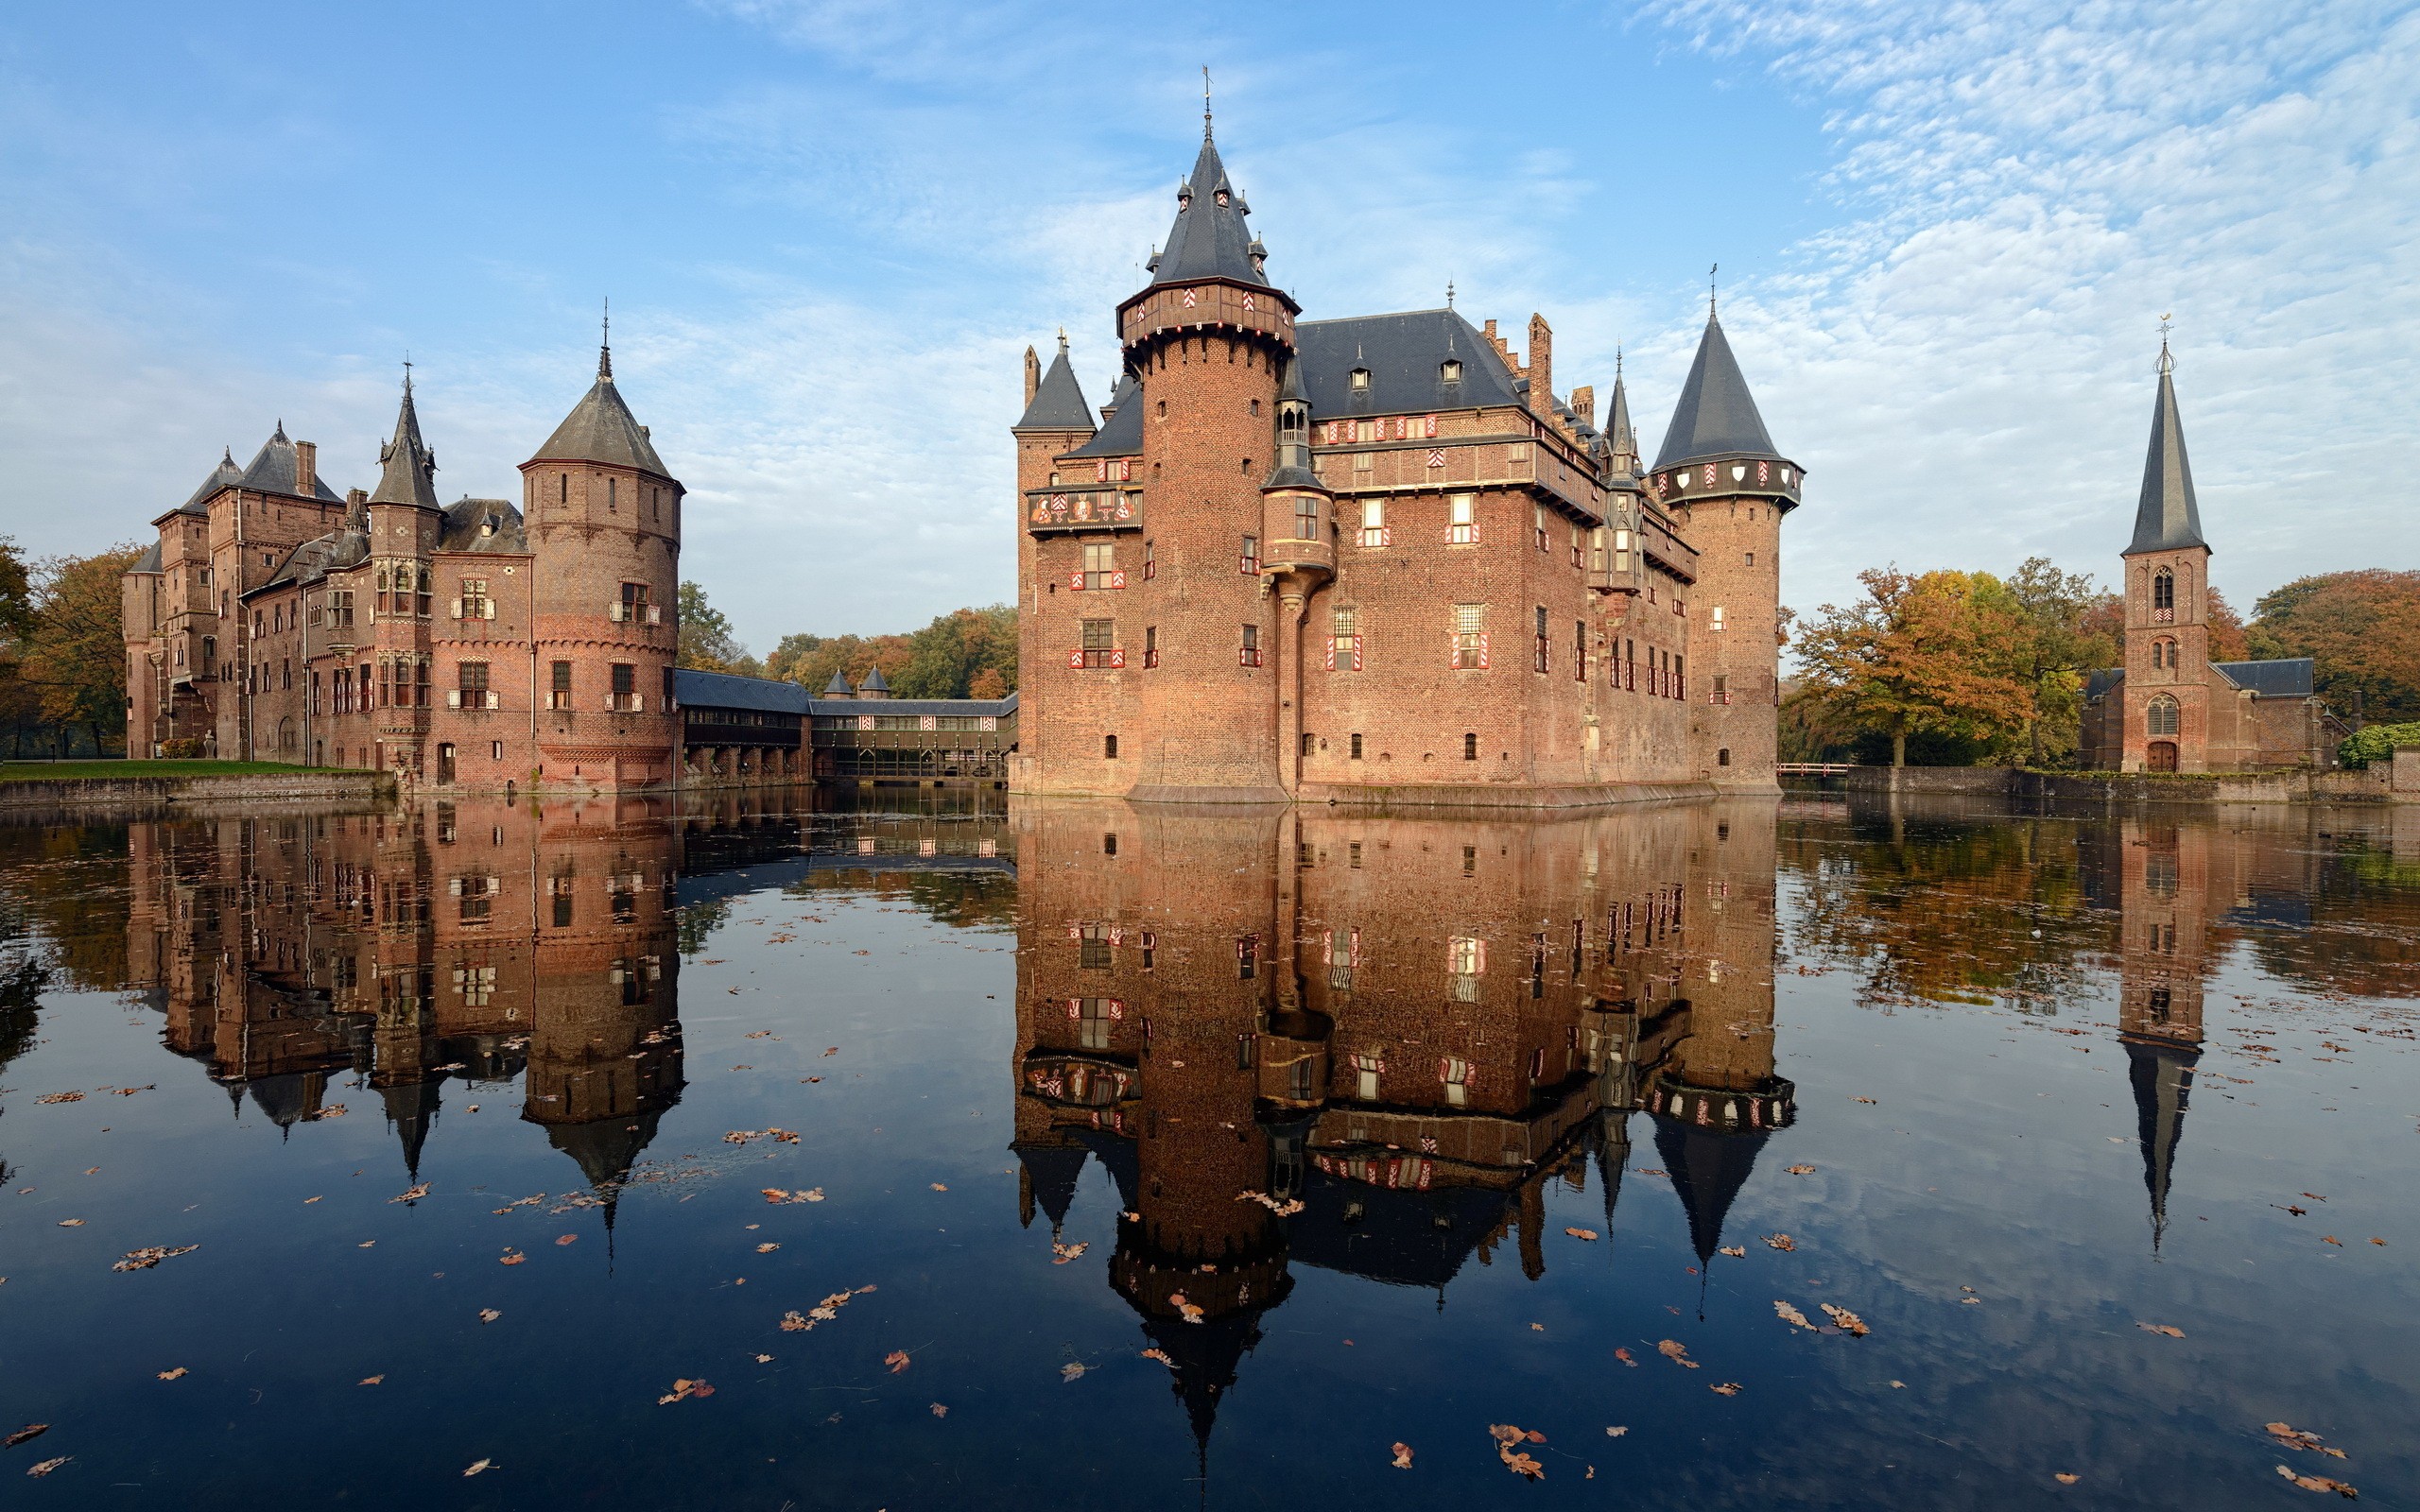 General 2560x1600 castle architecture reflection lake building Netherlands